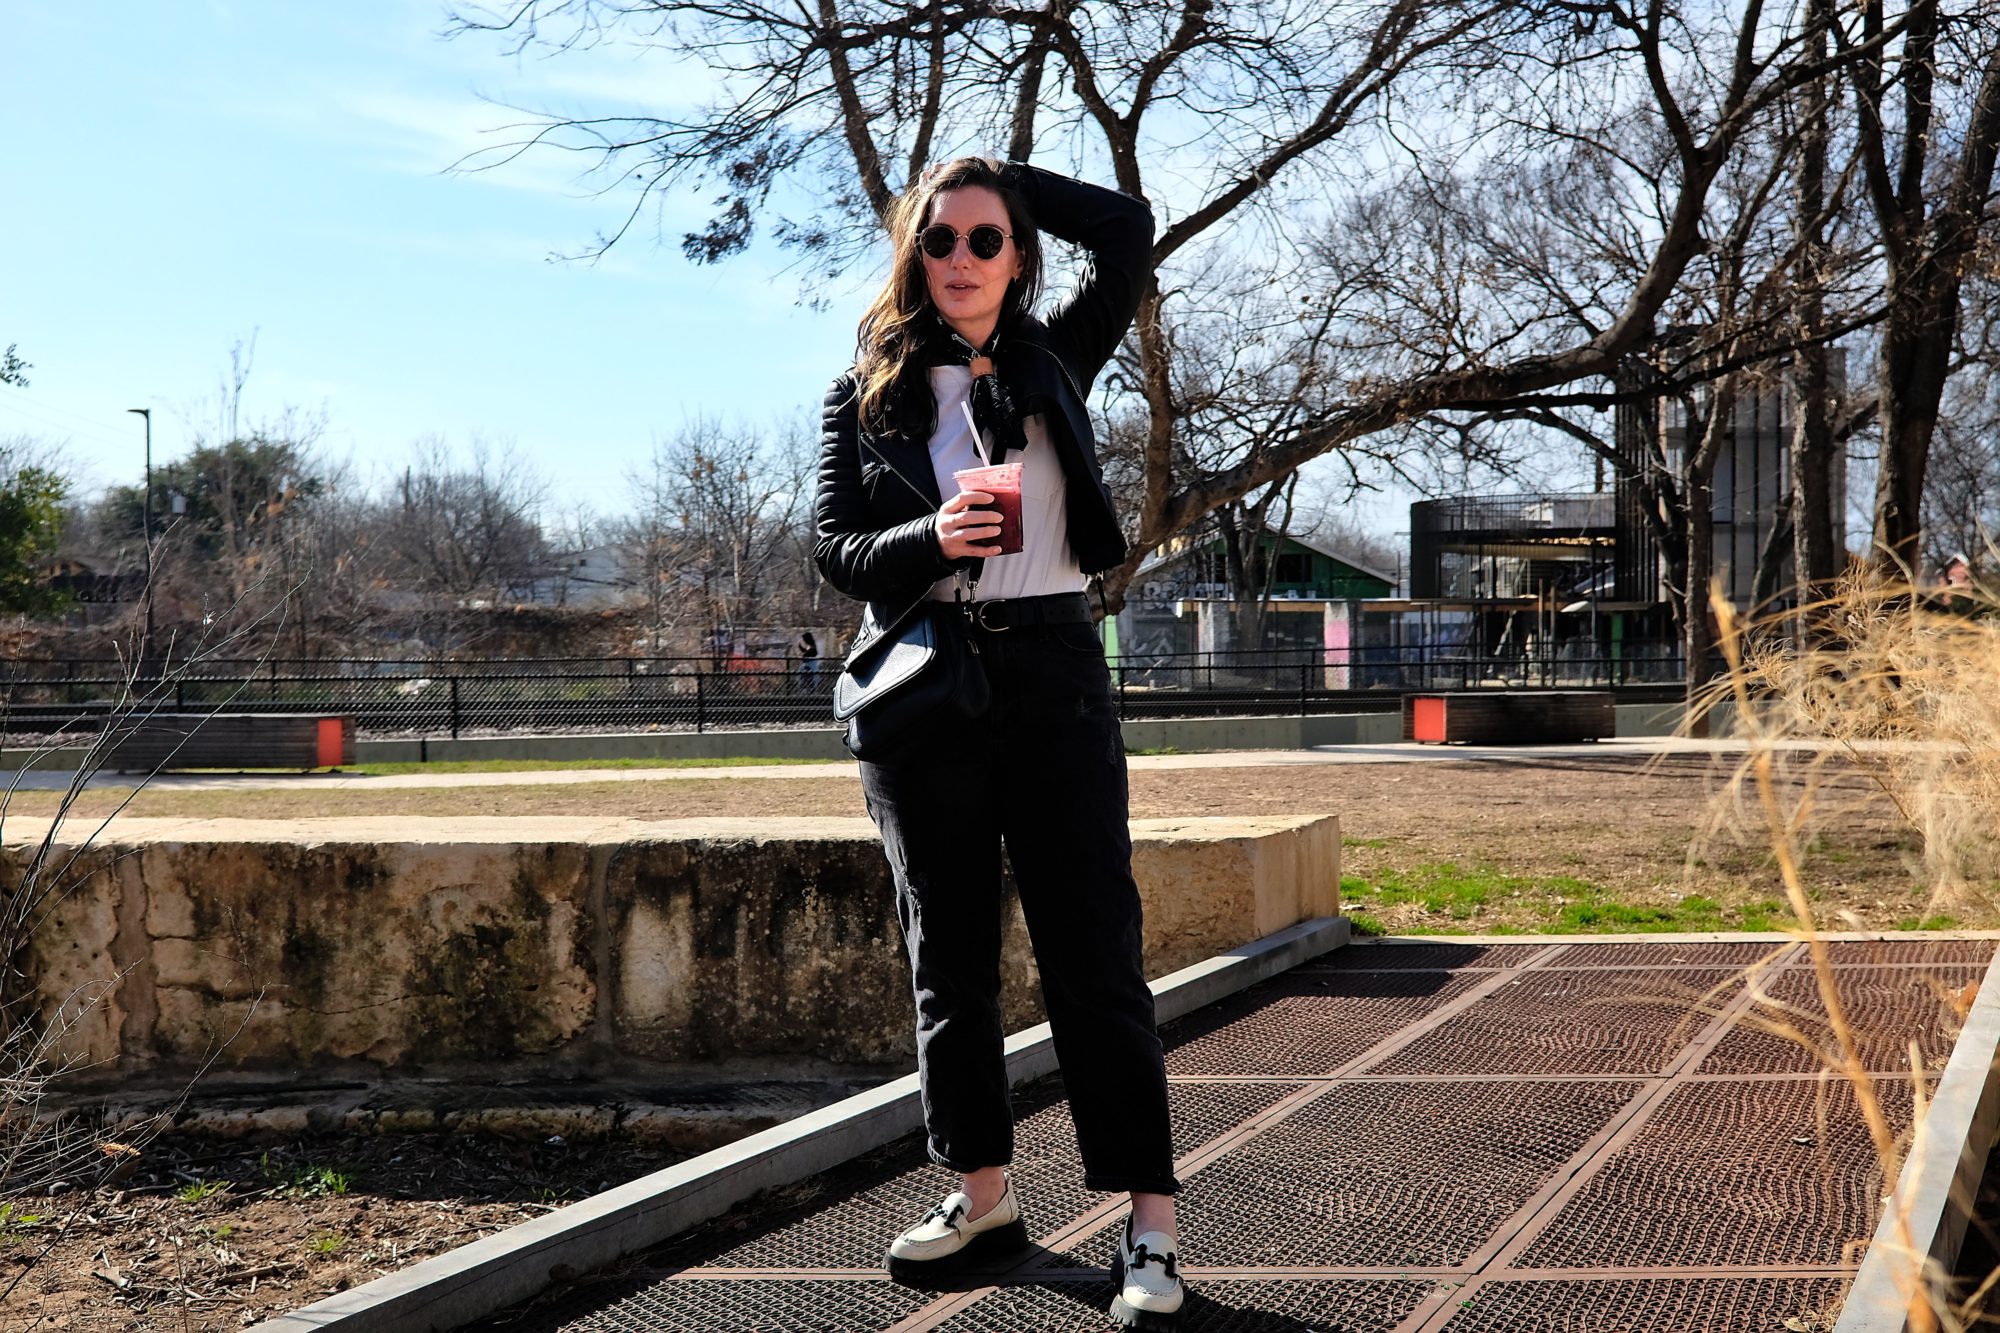 Alyssa stands on a mini bridge holding a cup of juice